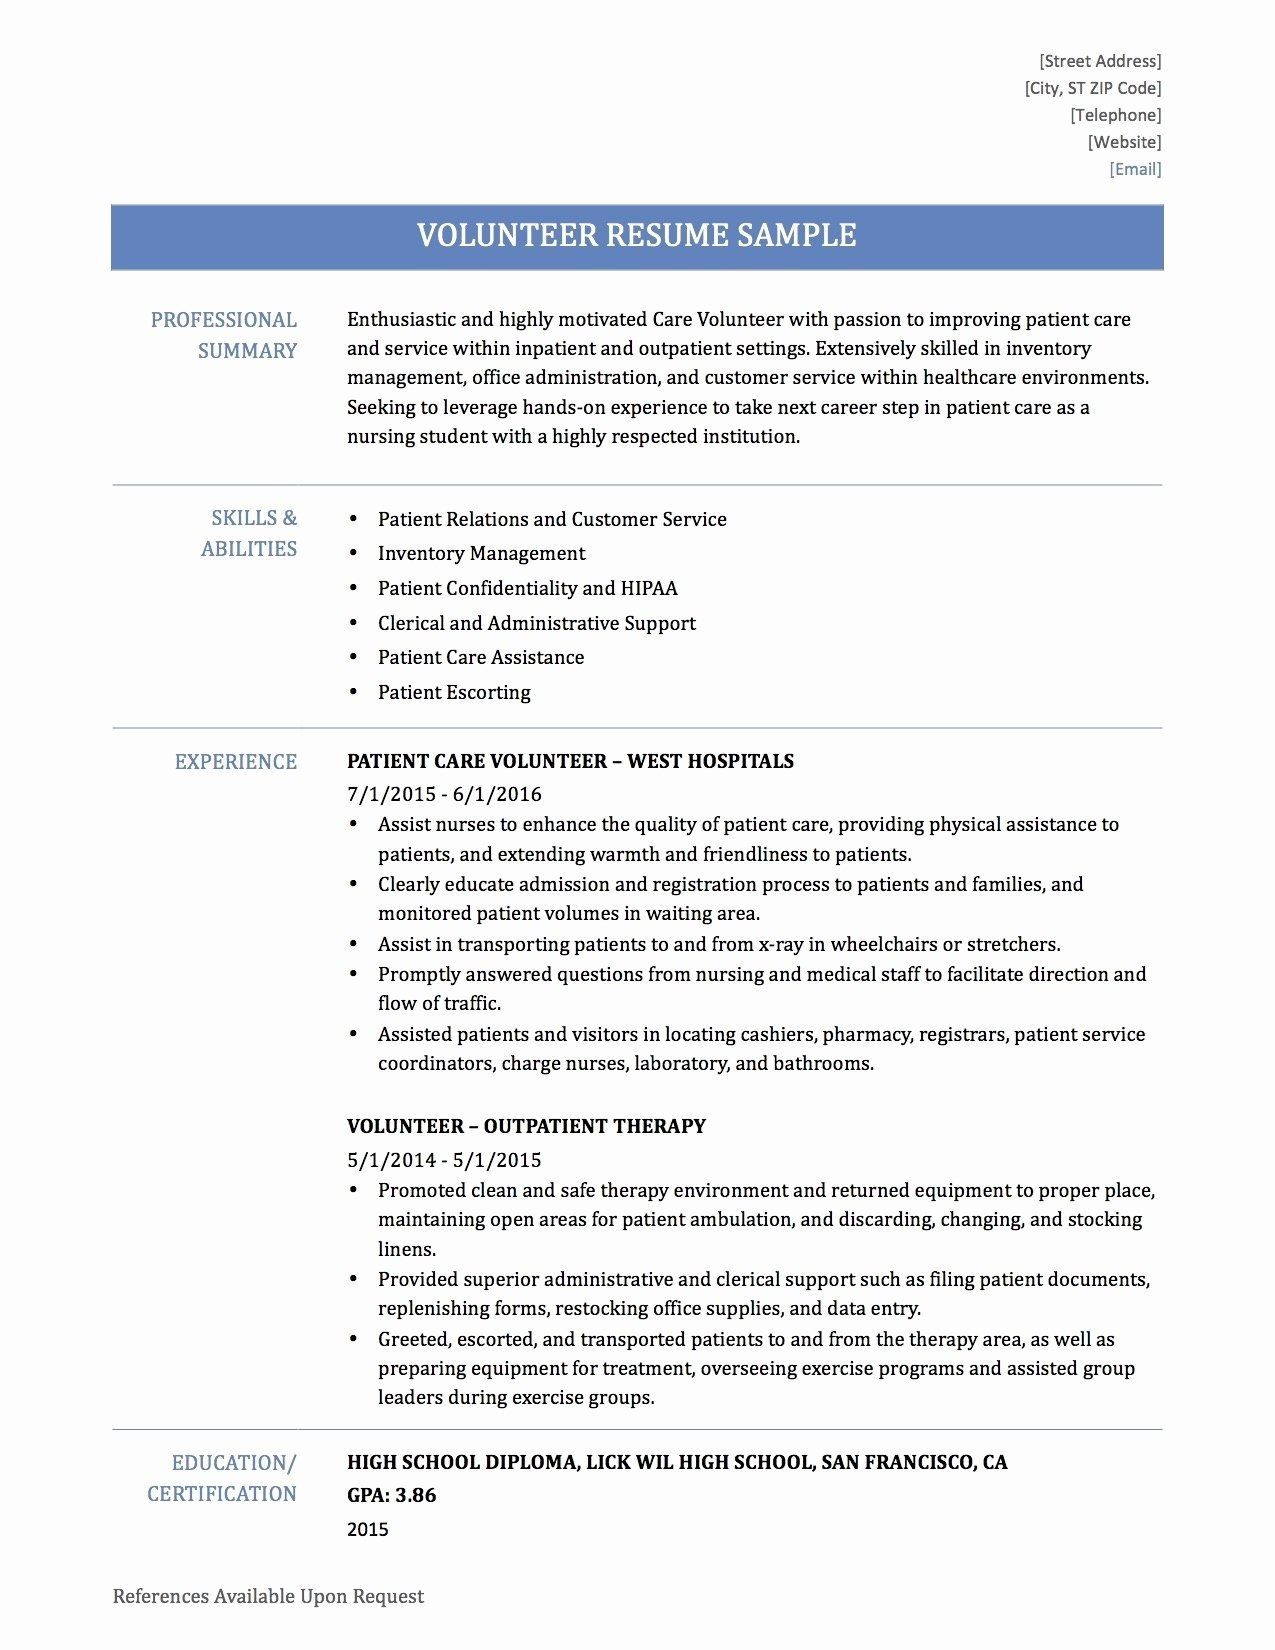 Ross School Of Business Resume Template Resume Examples Volunteer – Resume Examples Resume Examples …